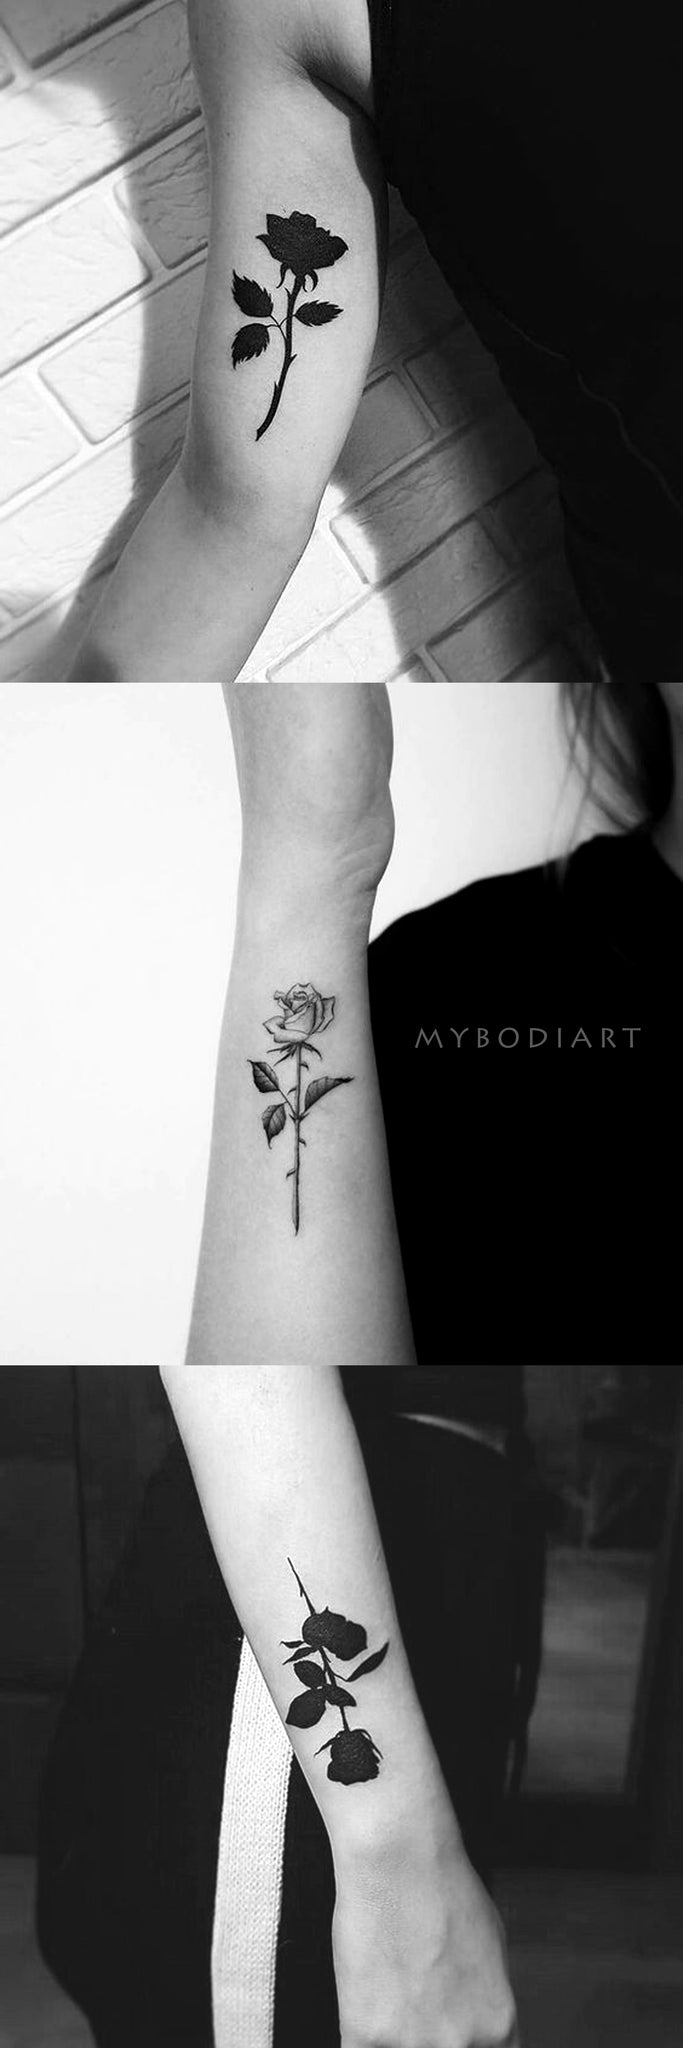 Darkest Black Rose Bicep Arm Tattoo ideas for Women - Ideas de tatuajes con flor rosa negra para mujeres - www.MyBodiArt.com 